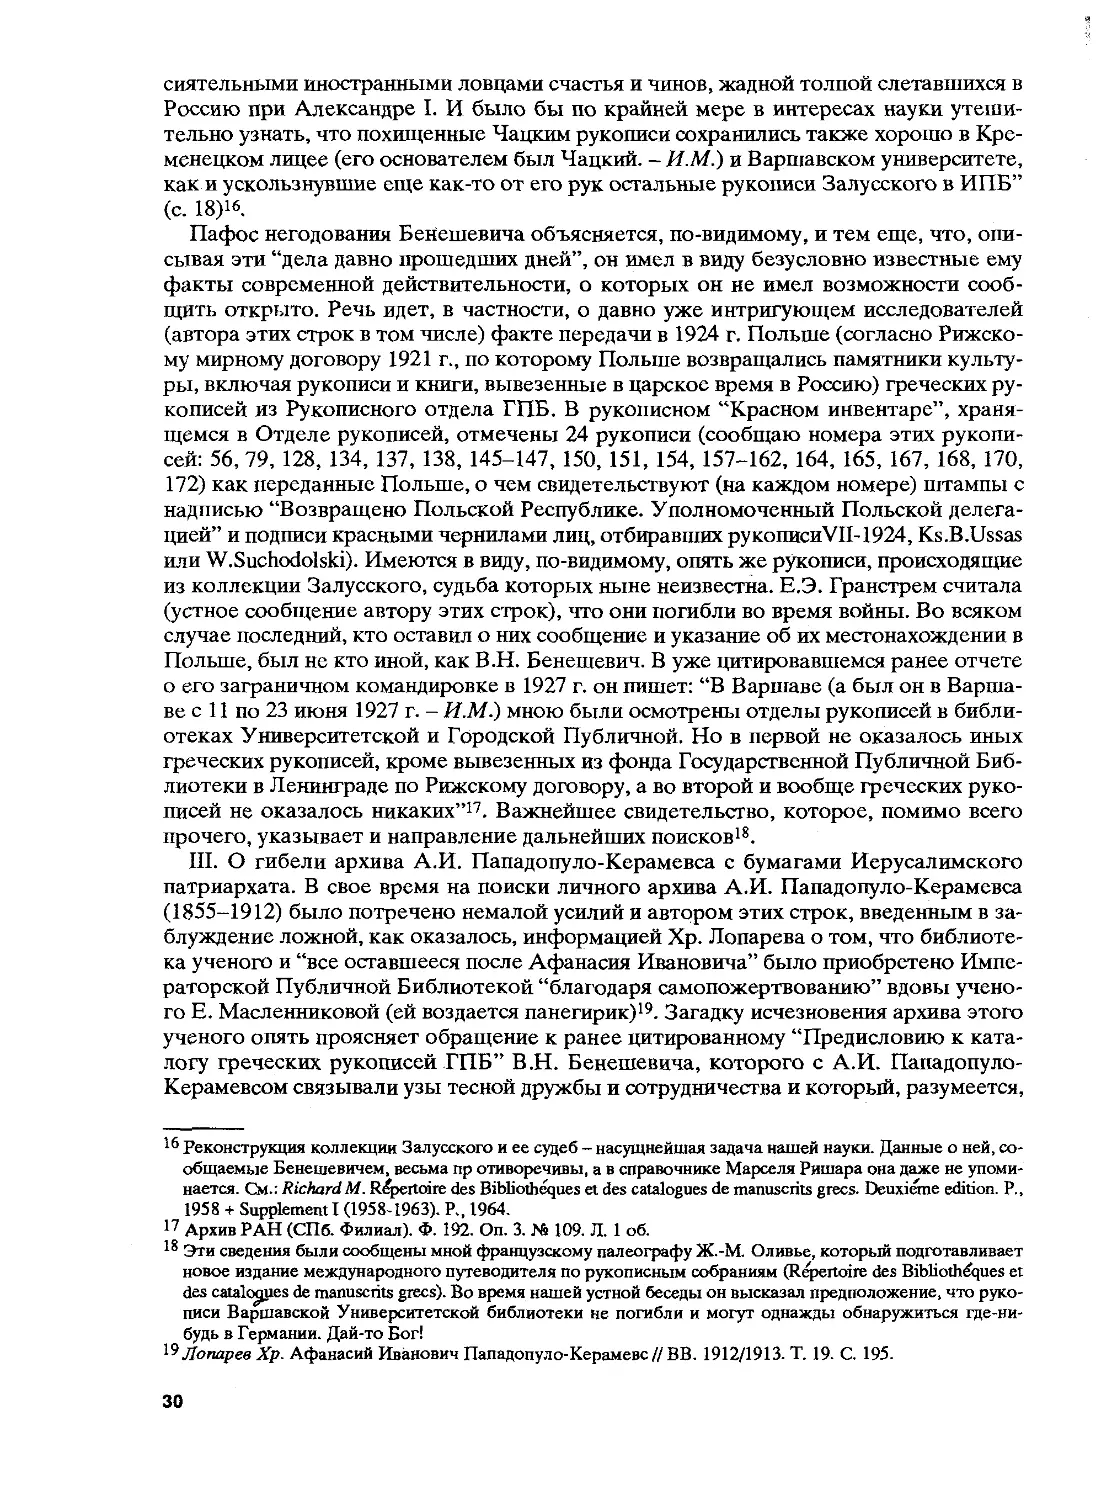 BB 55_1 Á994ù 31.pdf